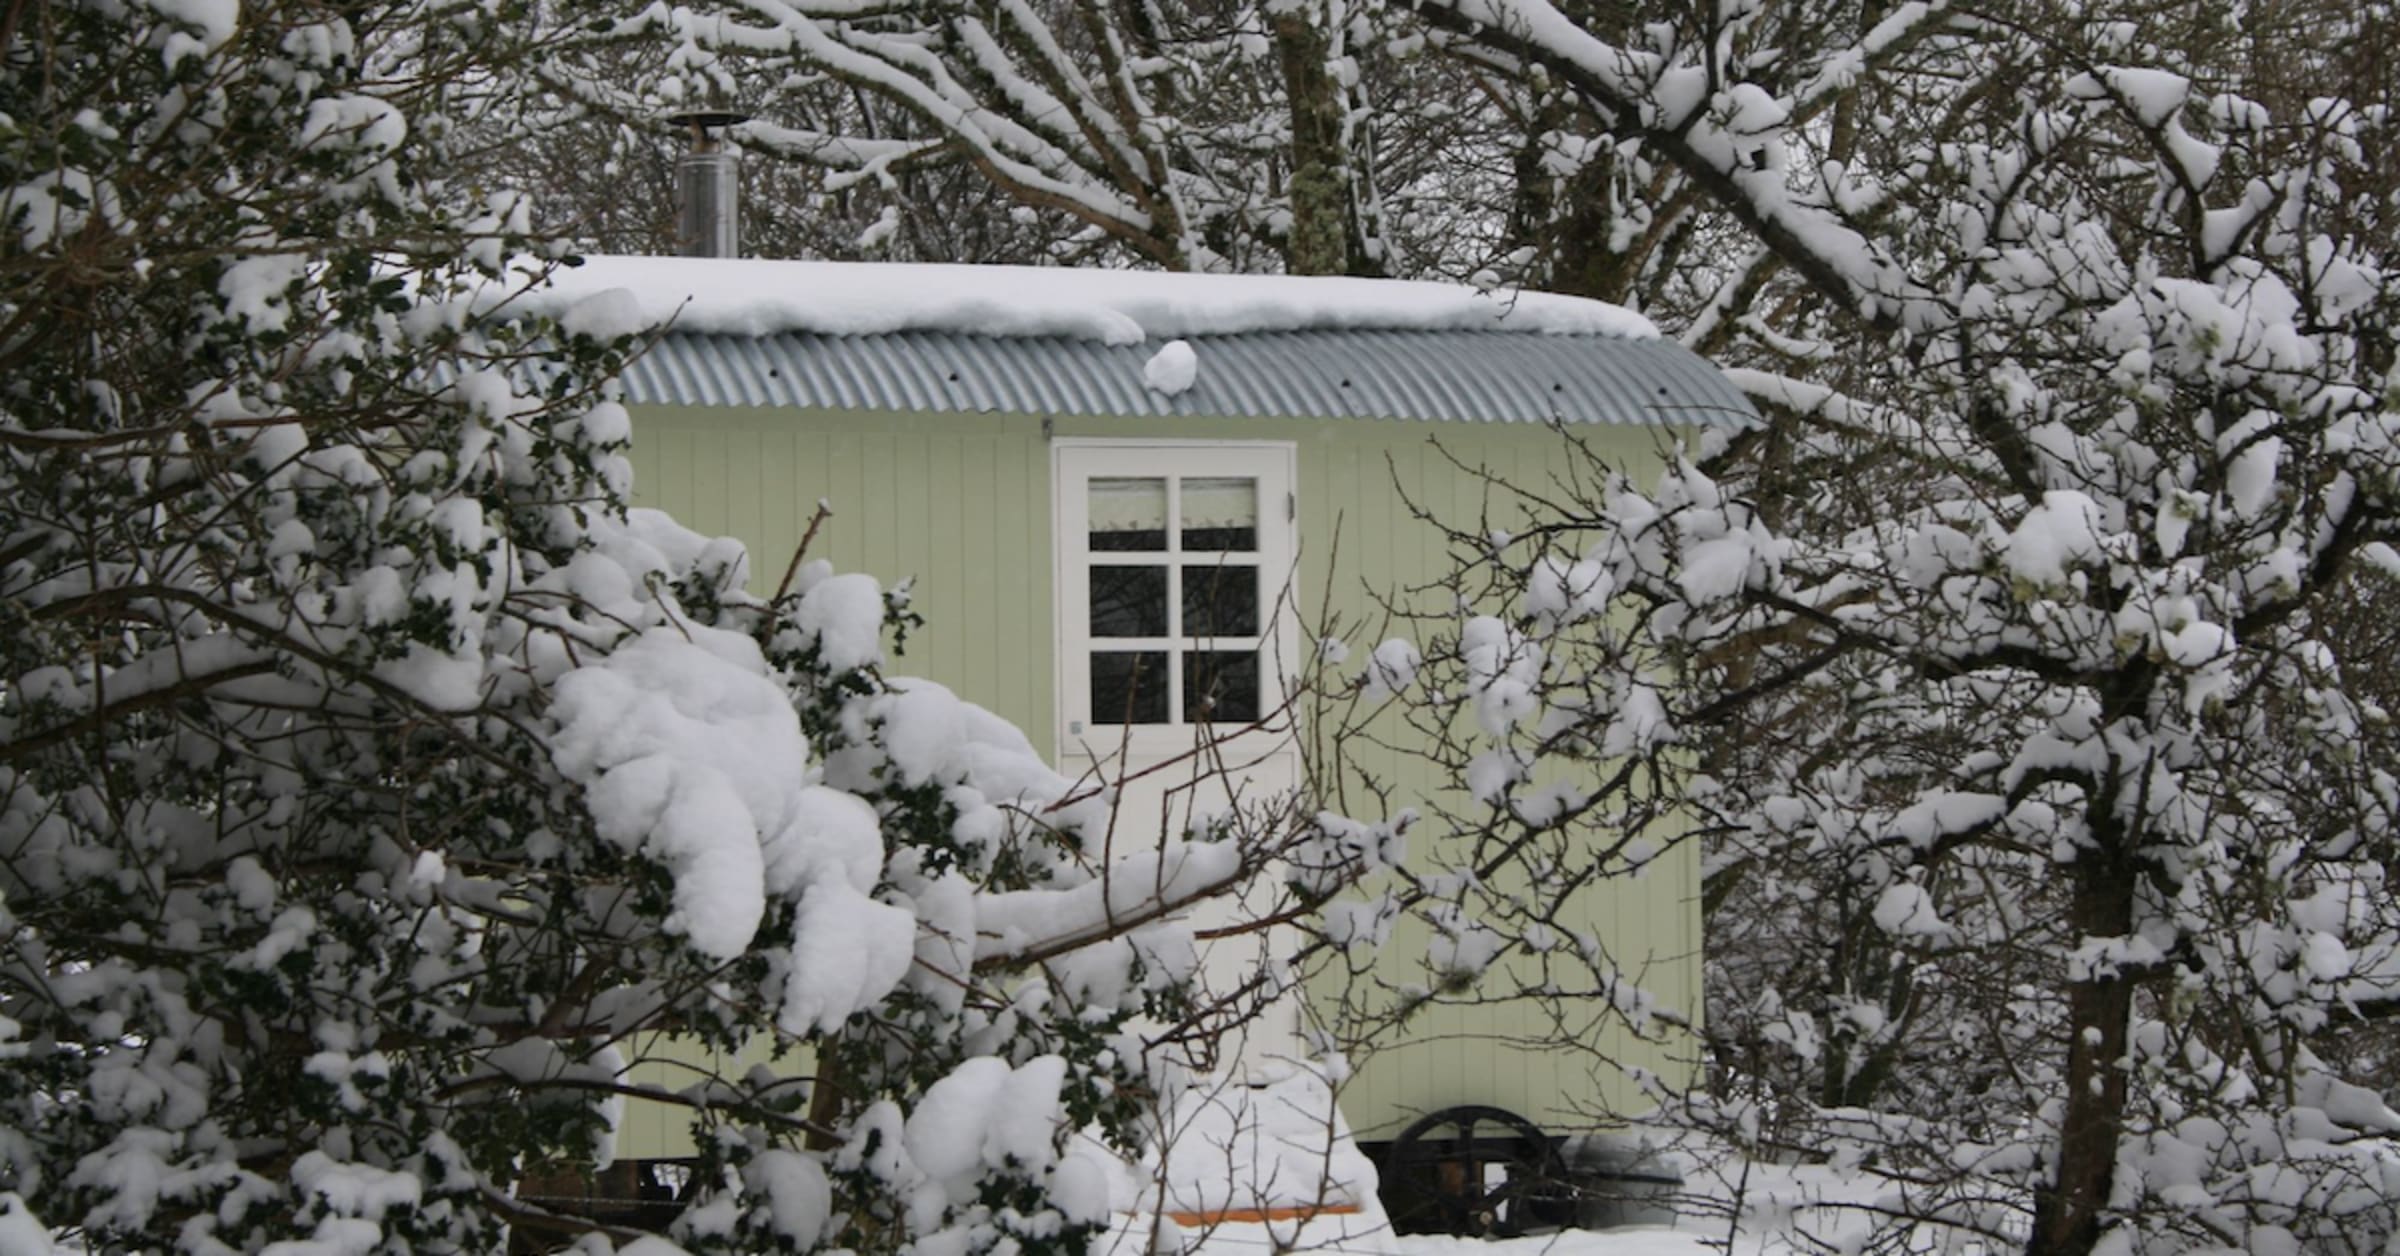 Romantic winter shepherd's huts